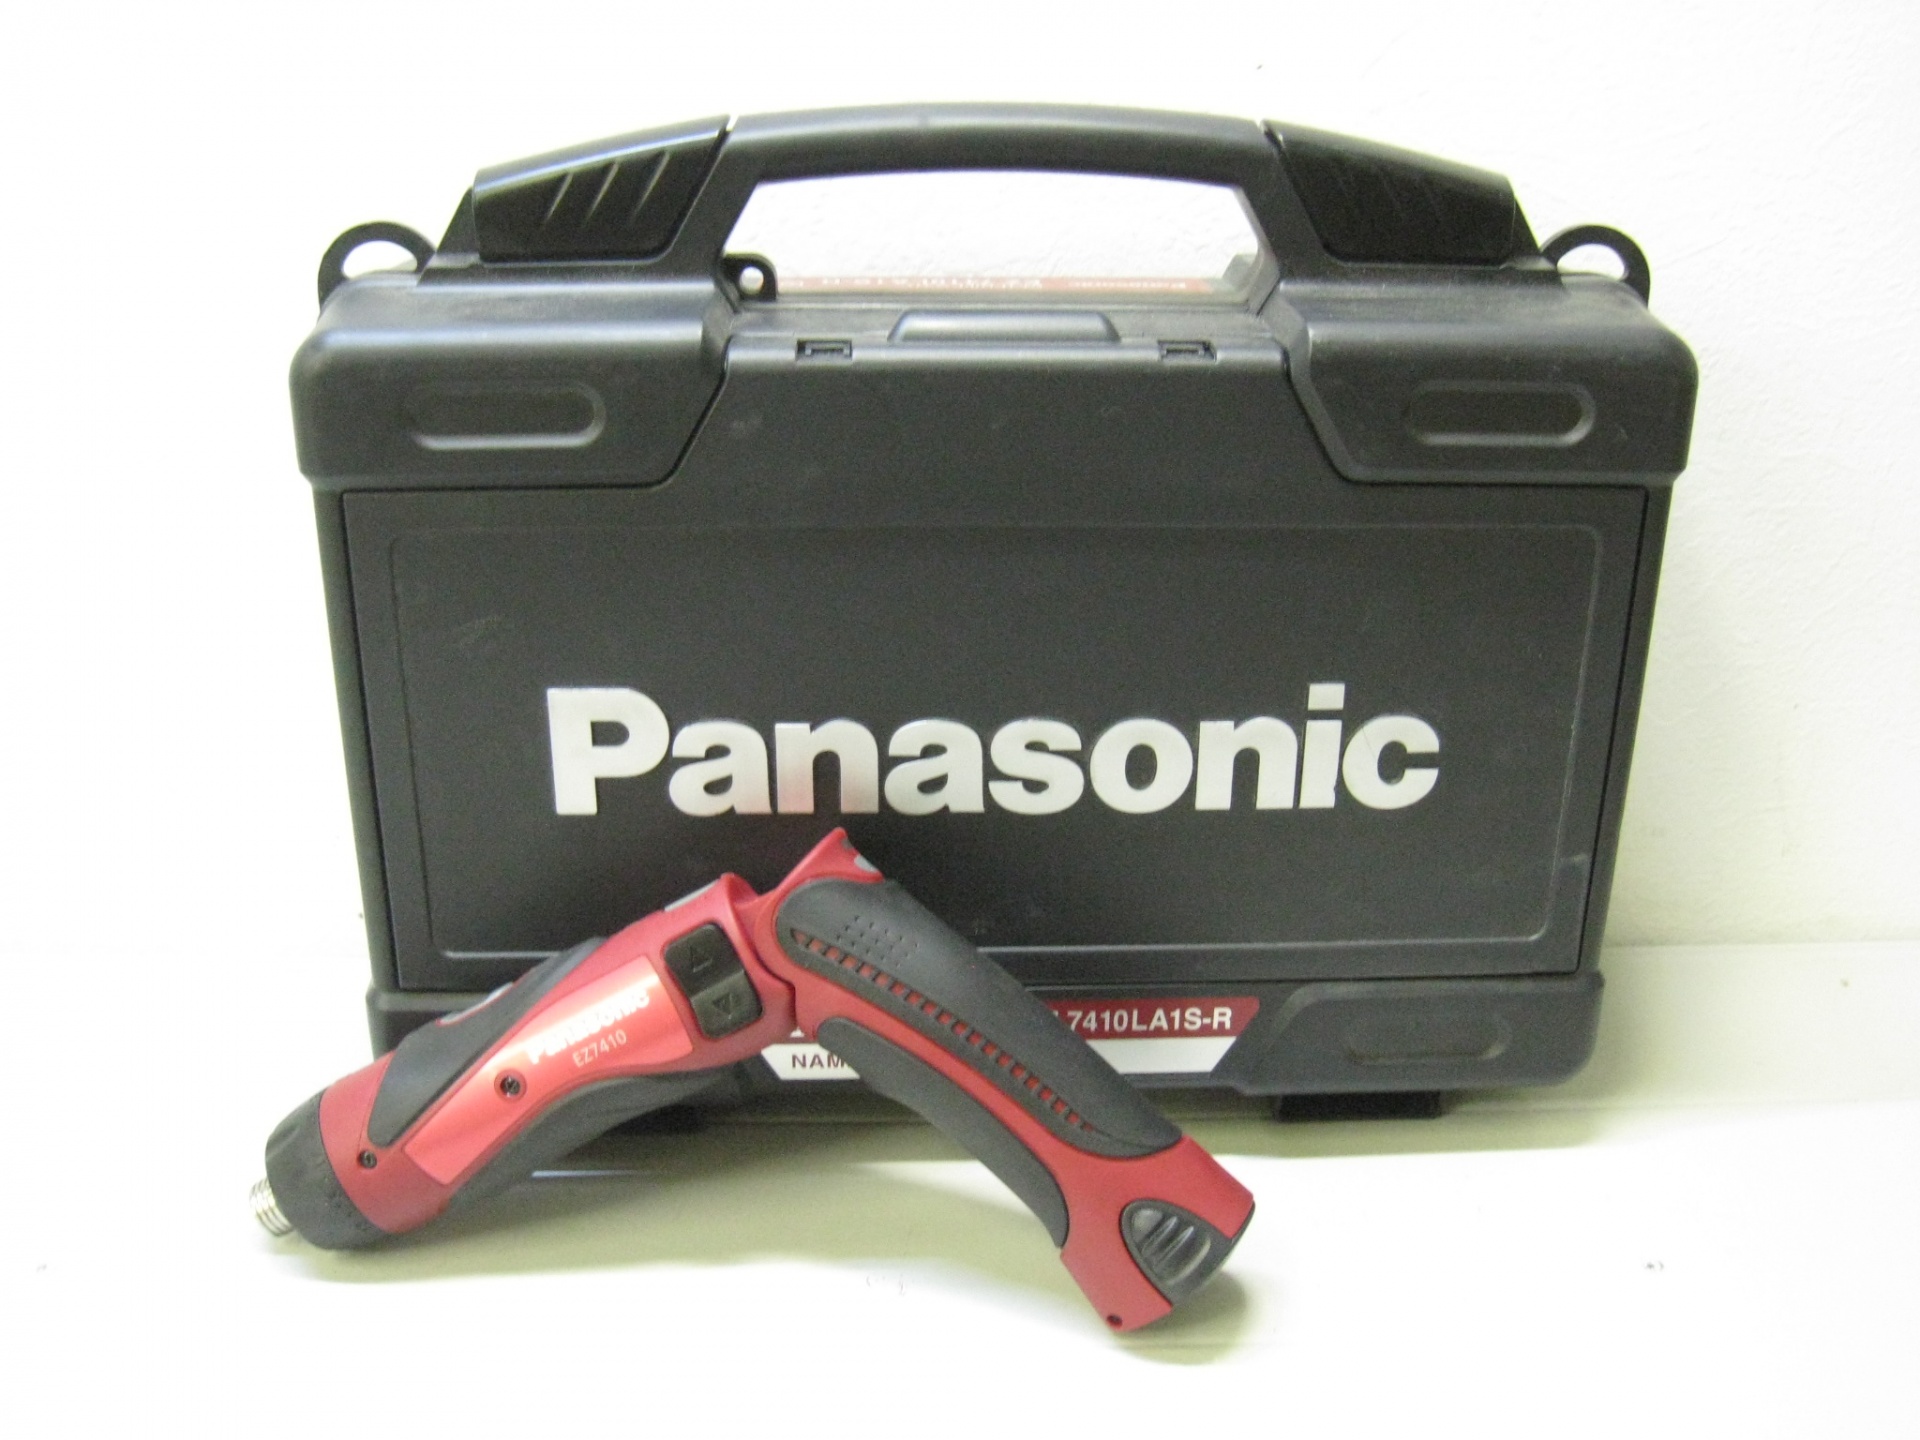 Panasonic パナソニック 充電ドリルドライバー EZ7410 電動工具買取強化中 | 香川県高松市の工具買取・販売に強いリサイクル